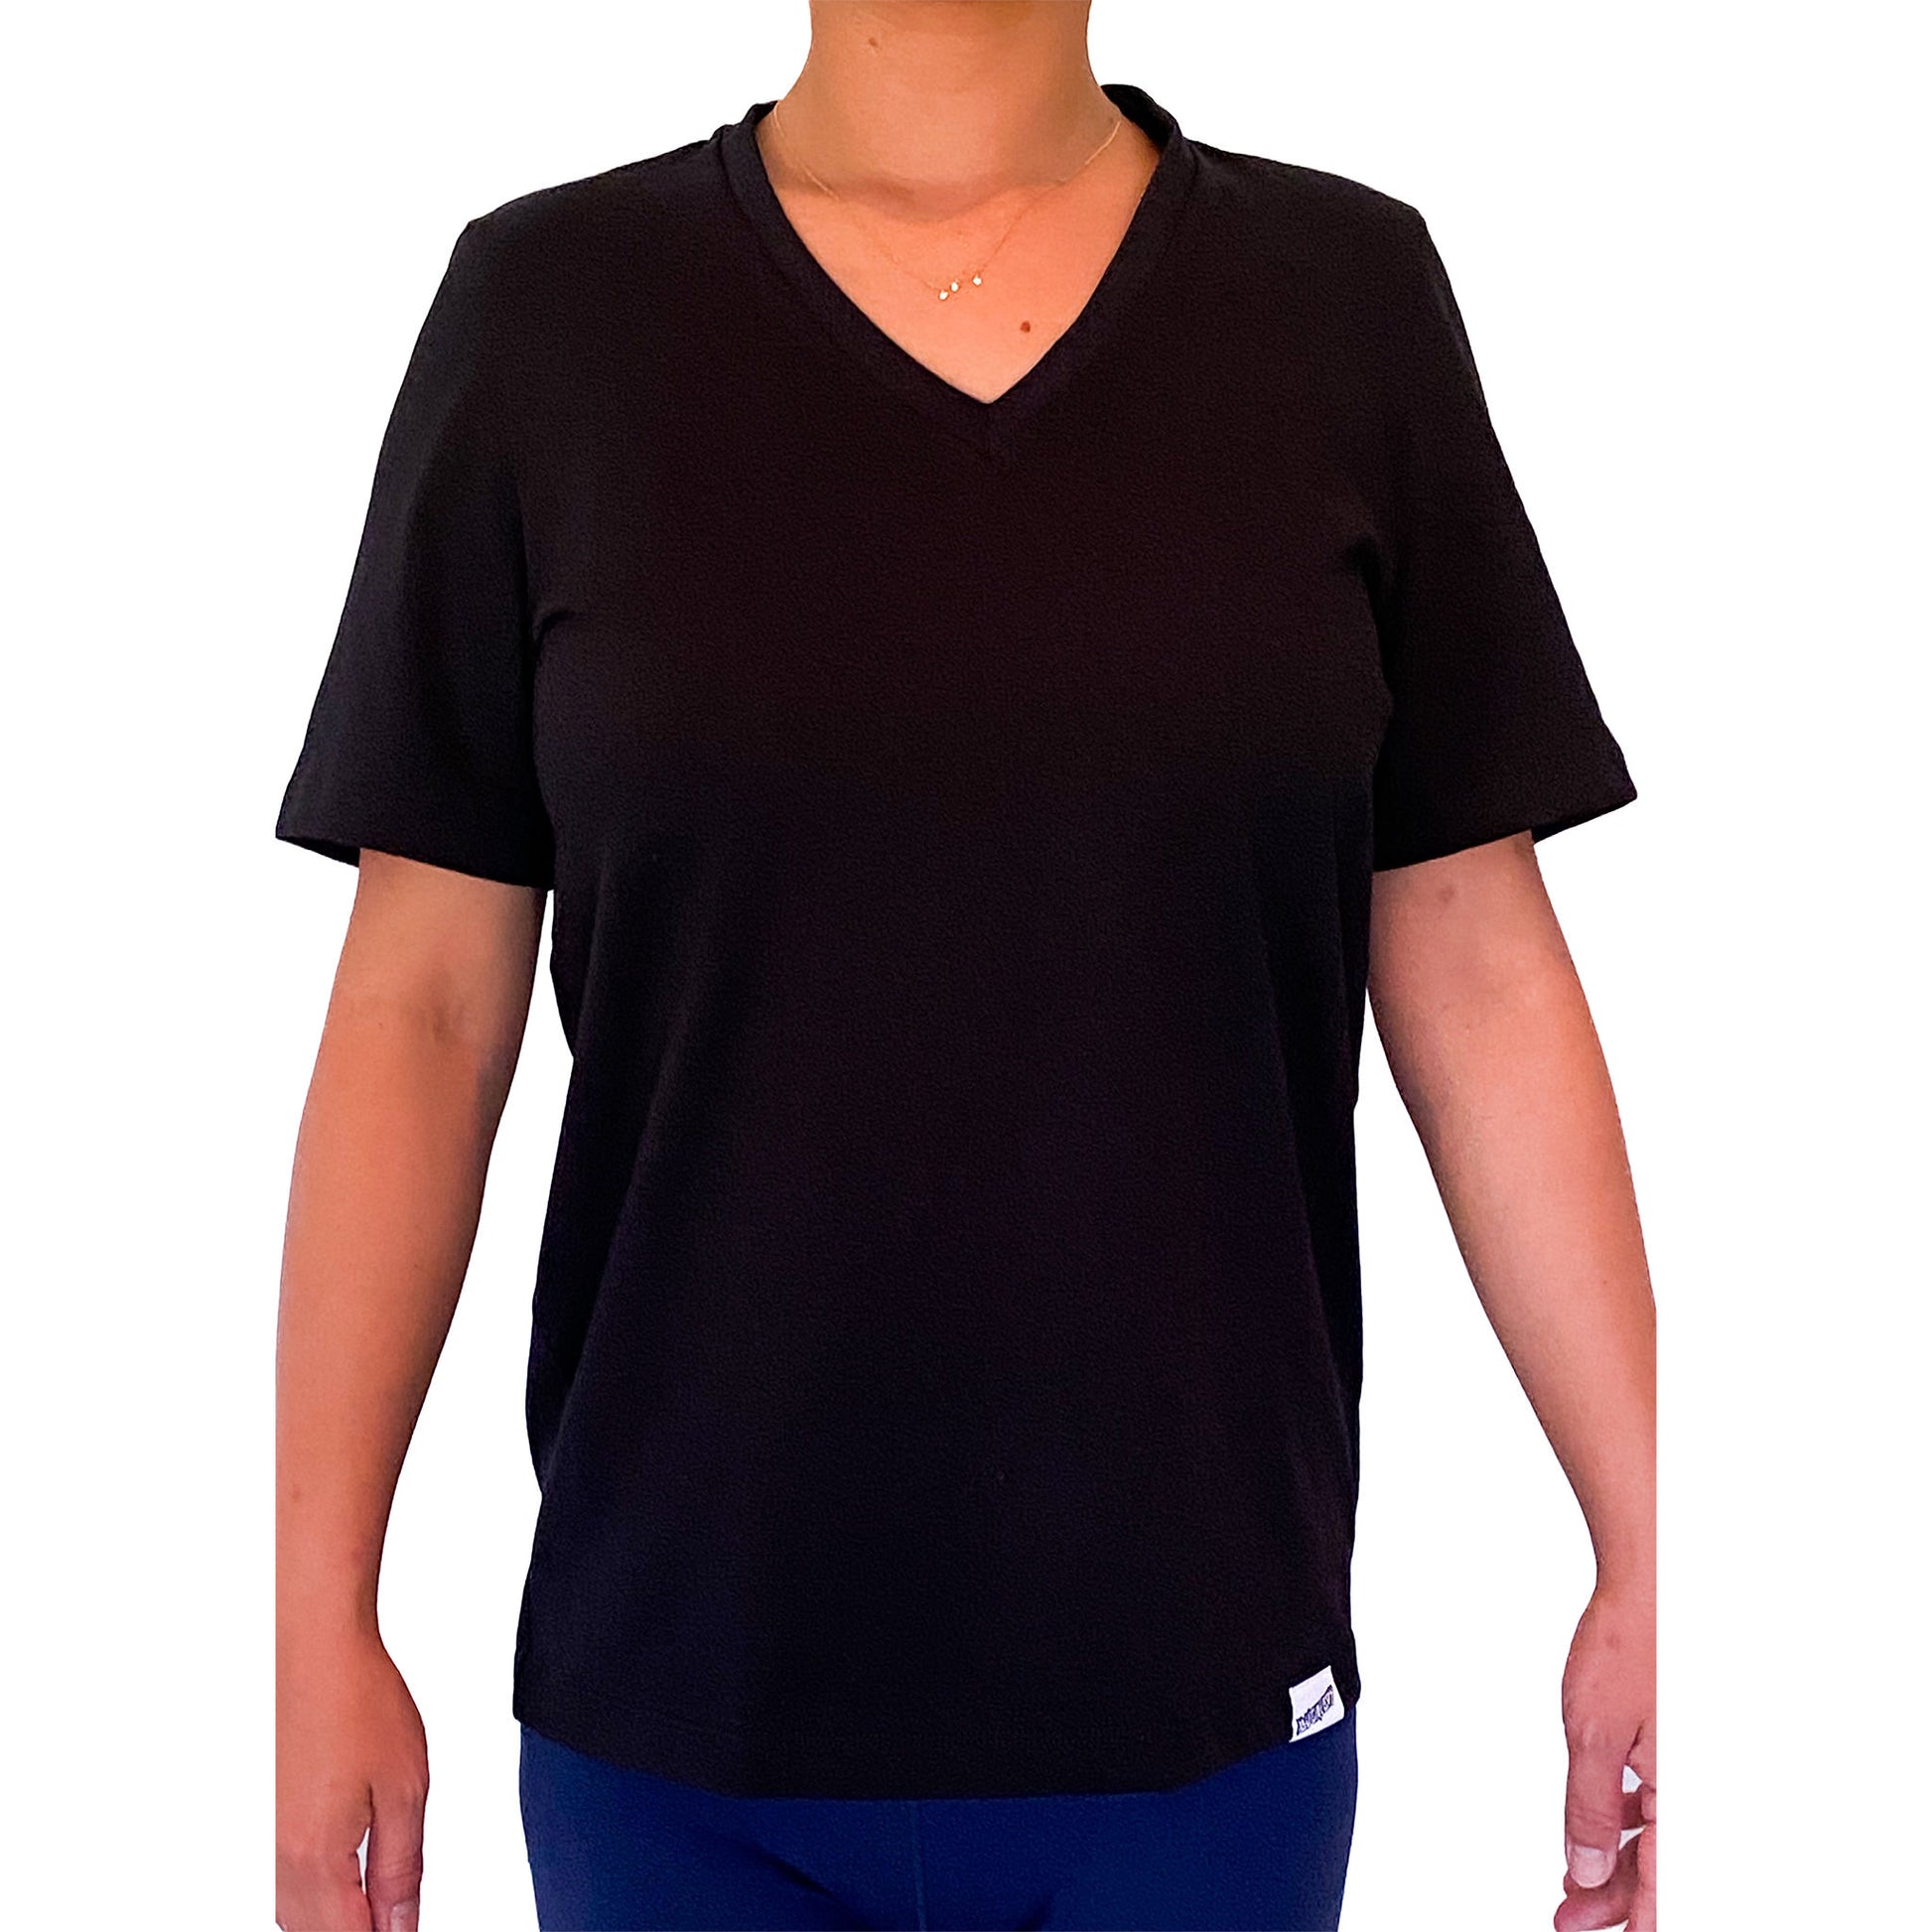 Ethical organic unisex t-shirt Black V neck Classic range